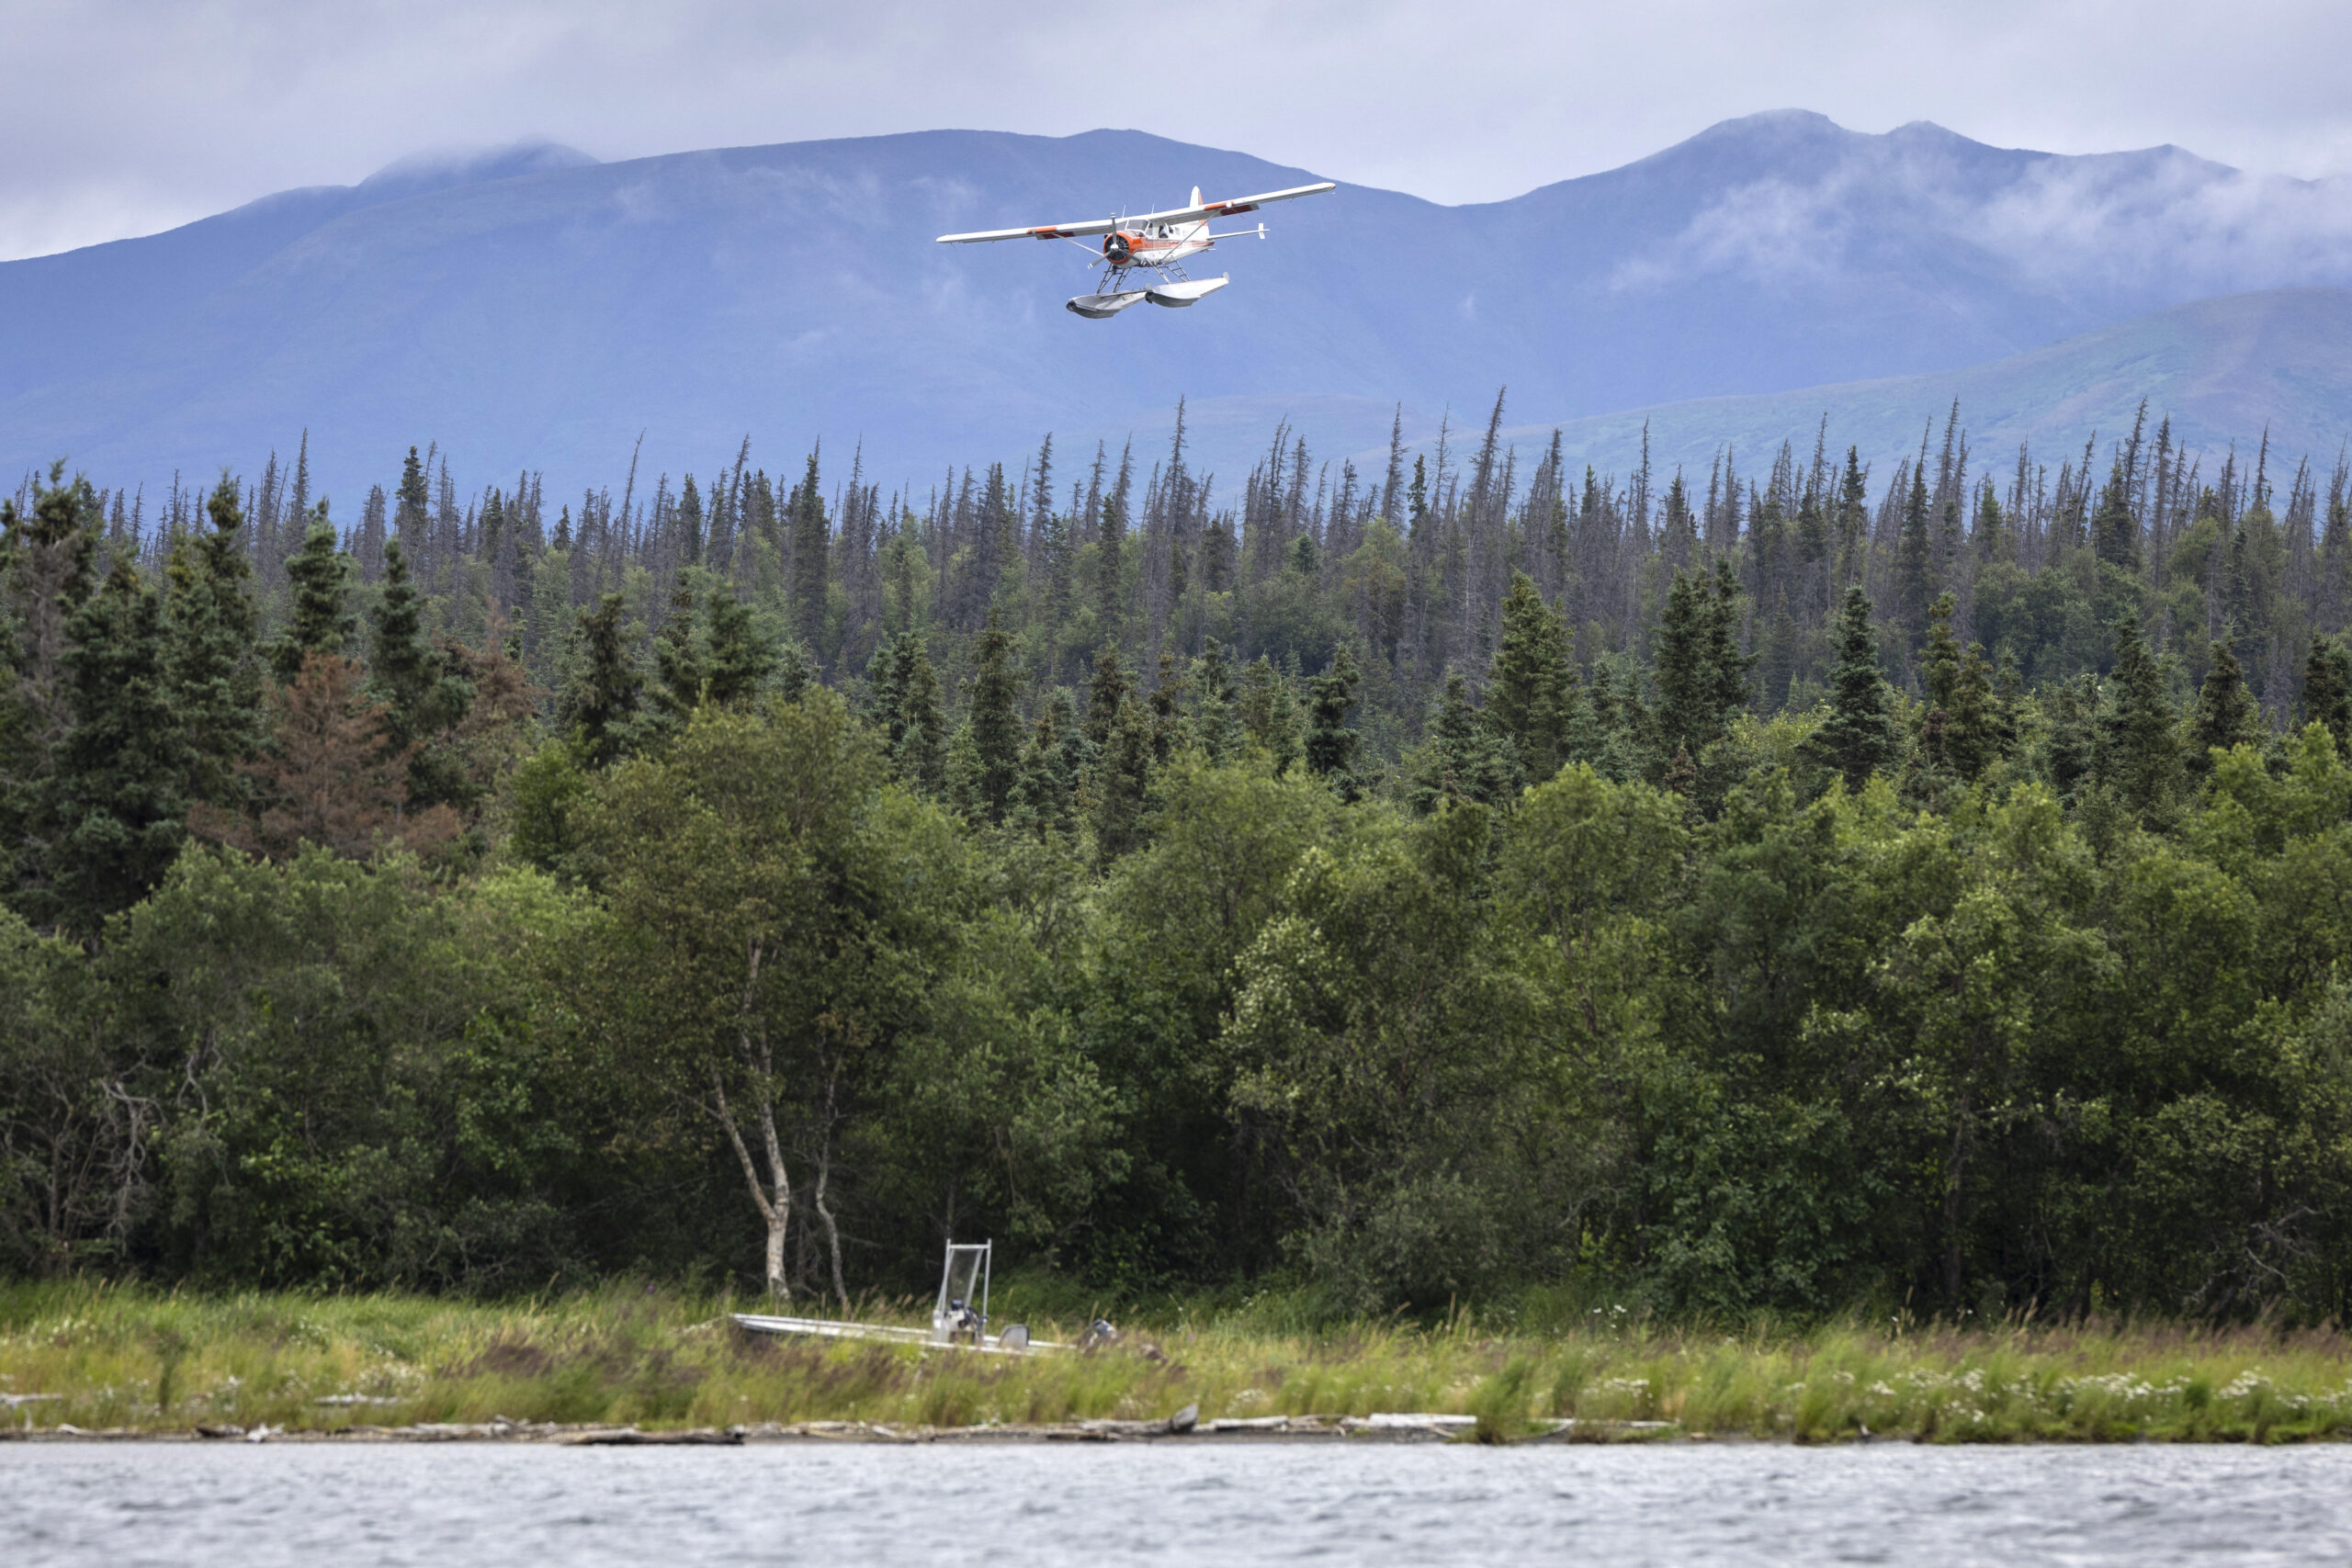 2 bodies found in plane submerged upside down in Alaska lake